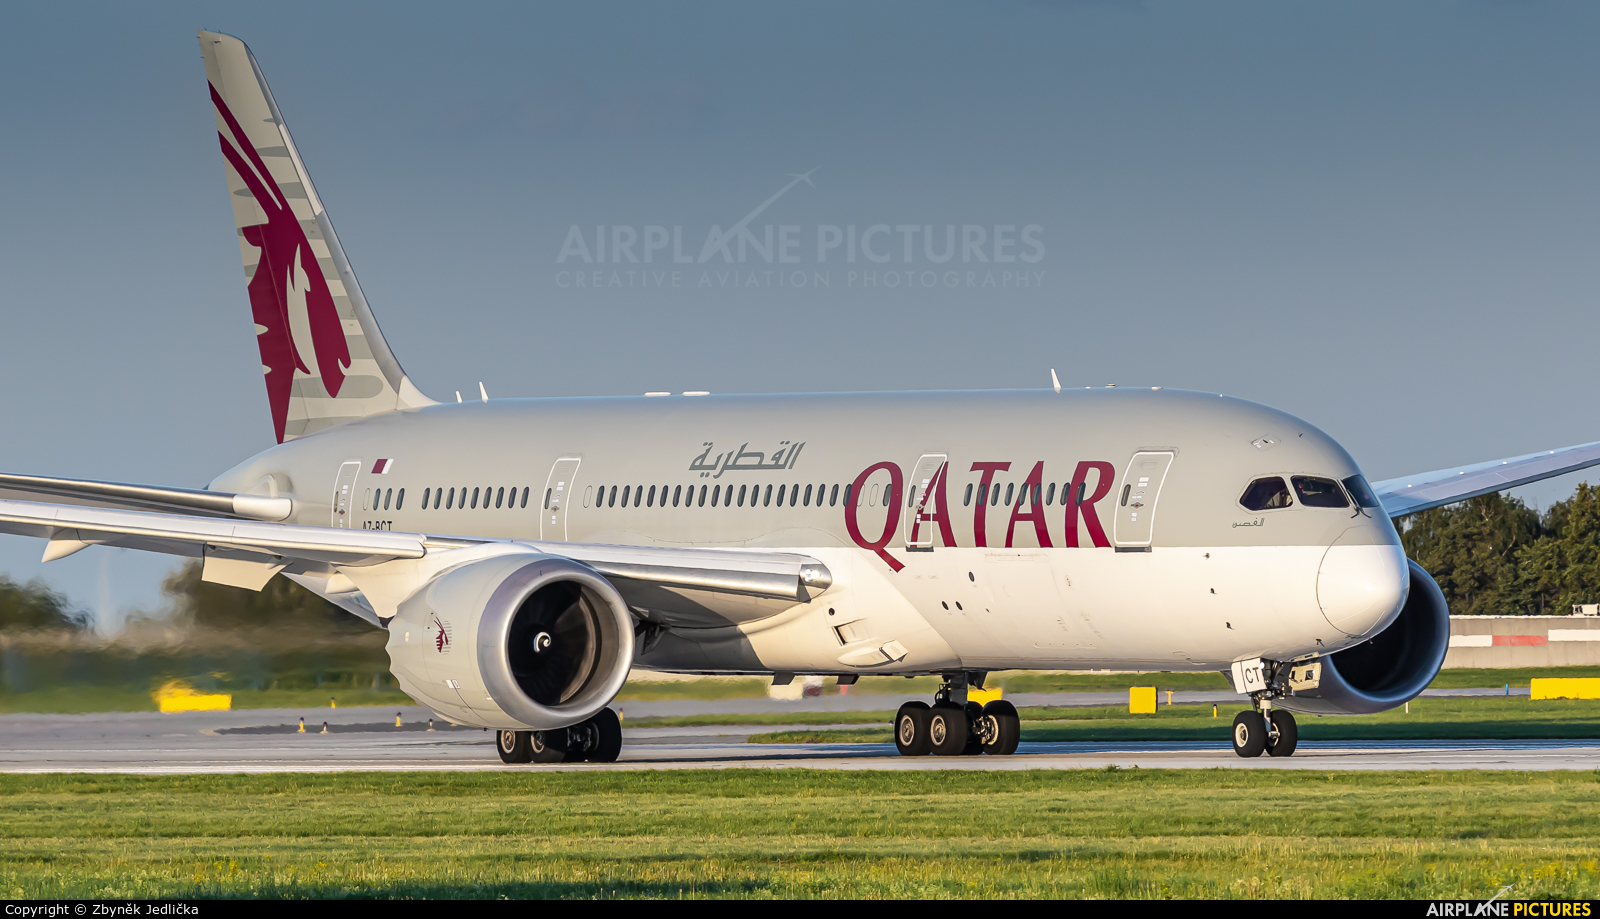 Qatar Airways A7-BCT aircraft at Prague - Václav Havel